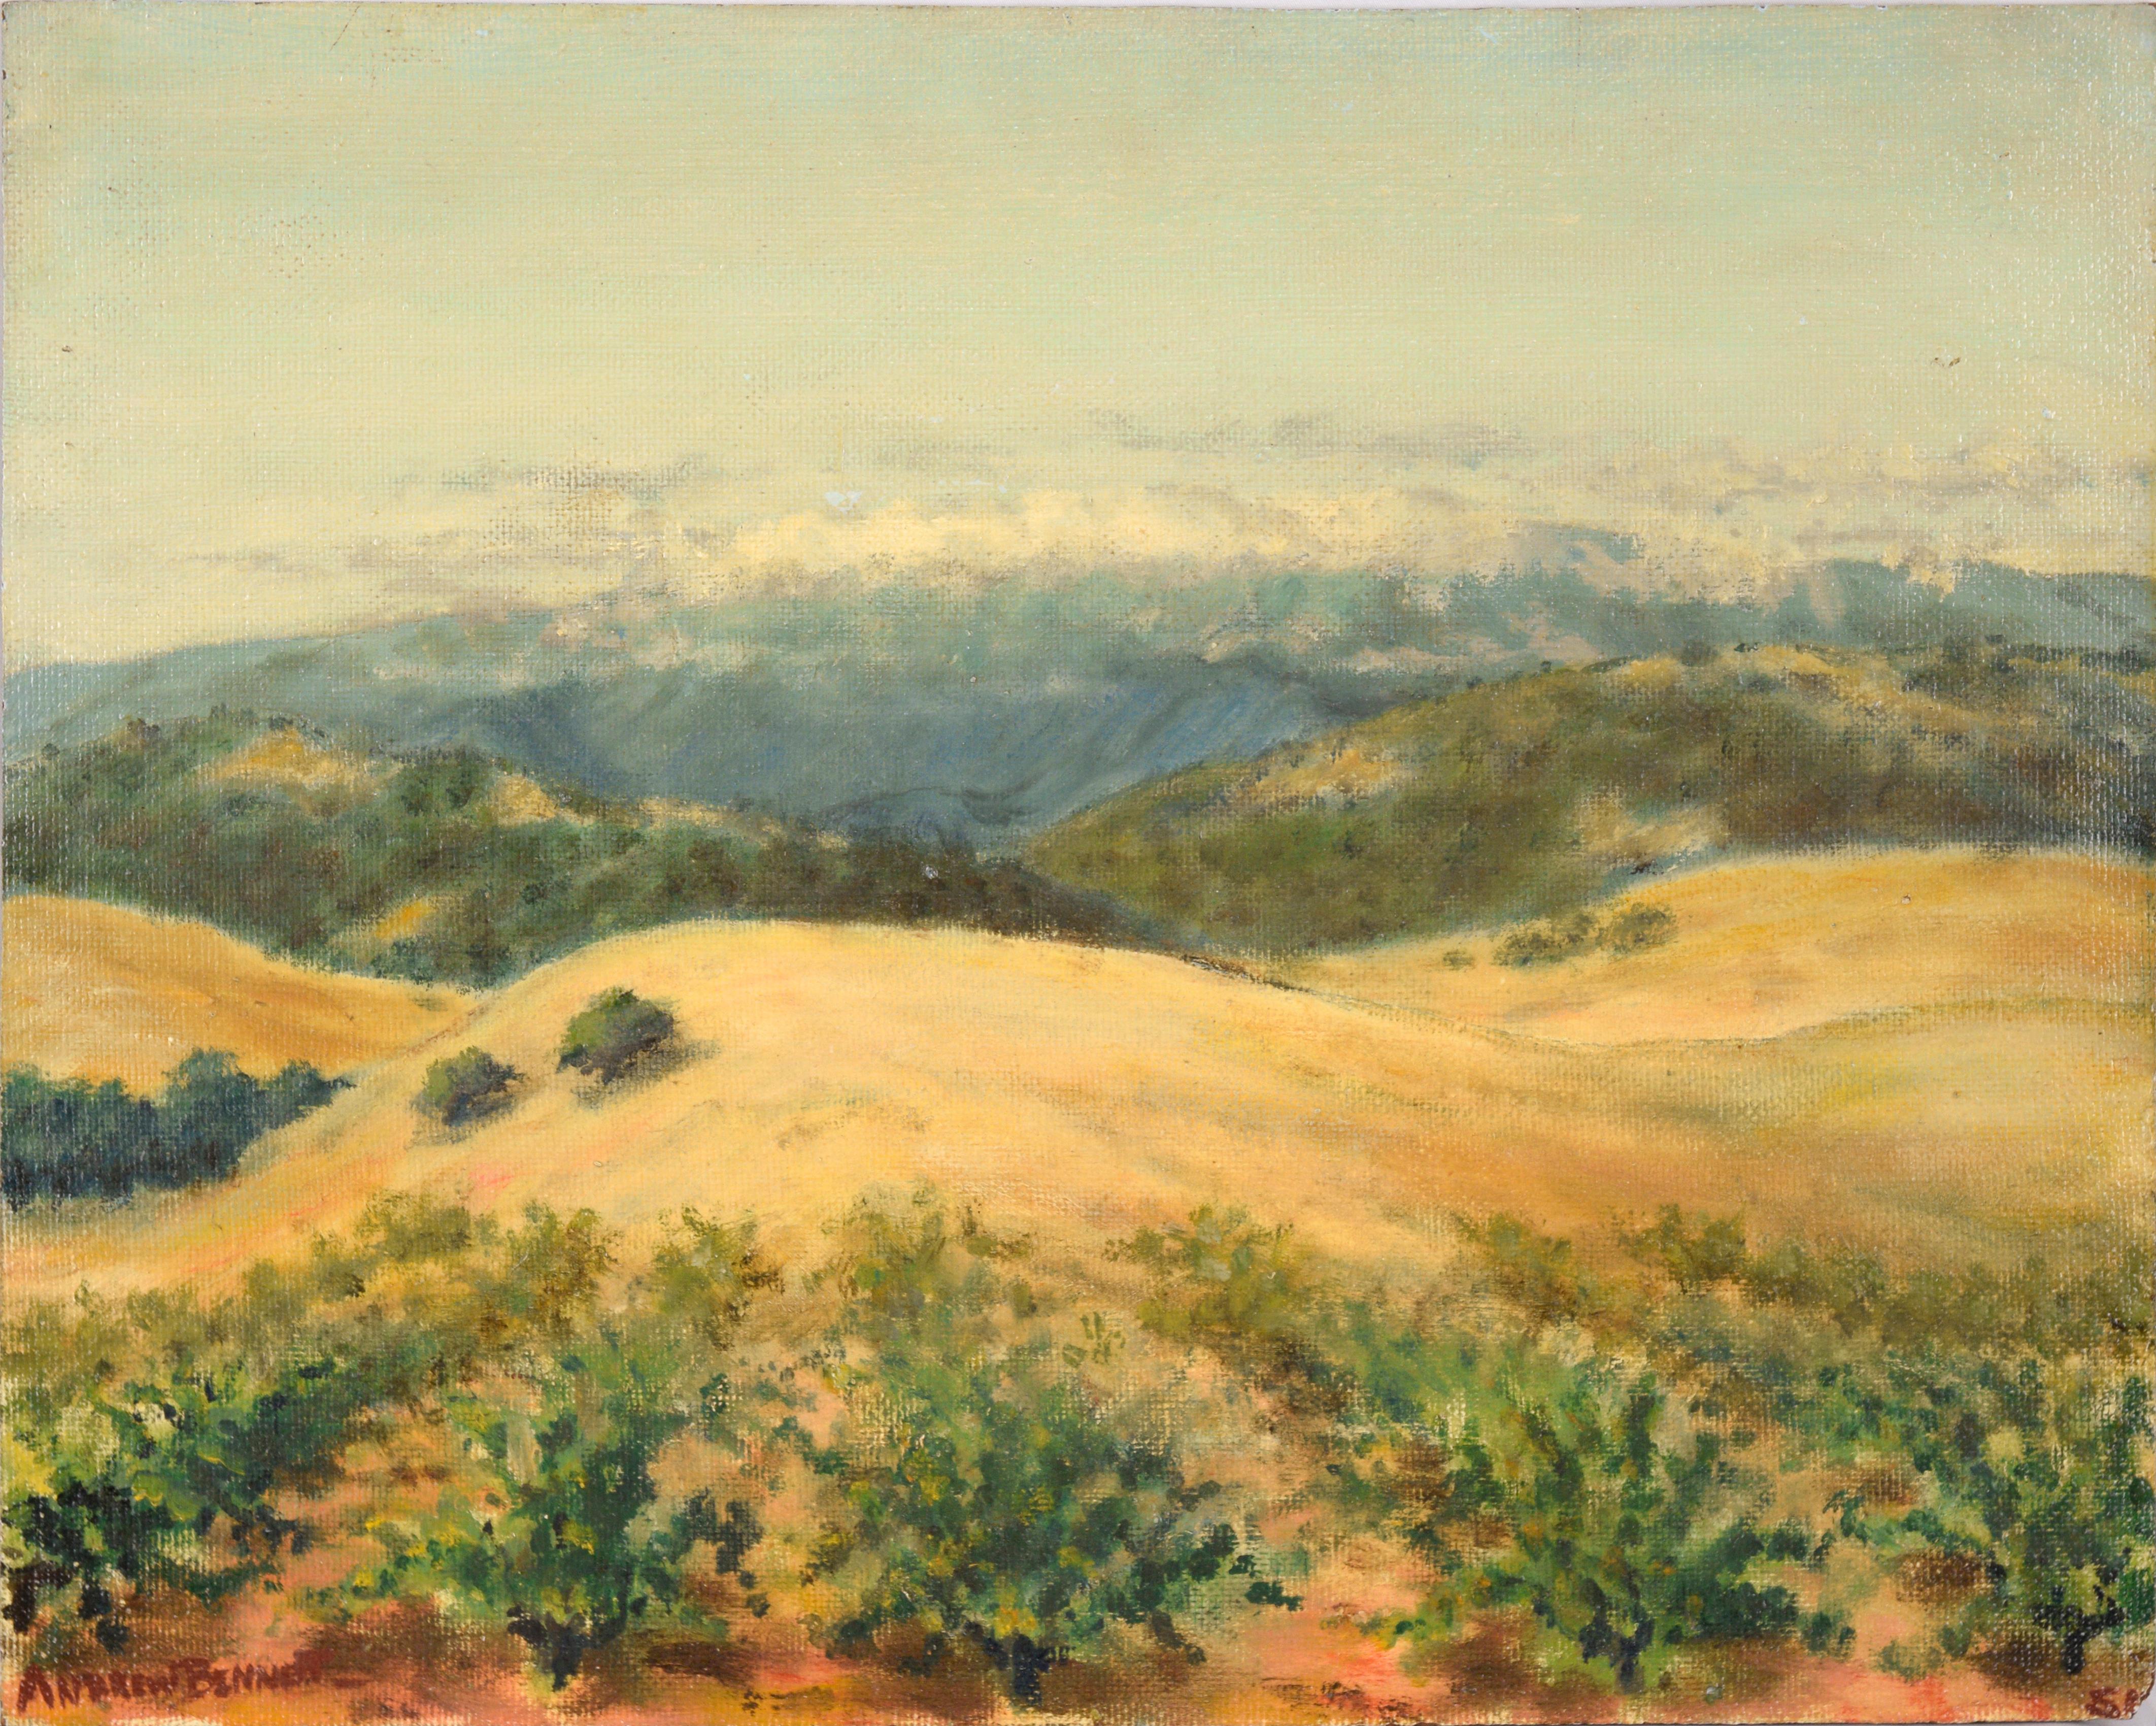 J. Andrew Bennett Landscape Painting - "California Round Hills" Mid Century Plein Aire Landscape in Oil on Masonite